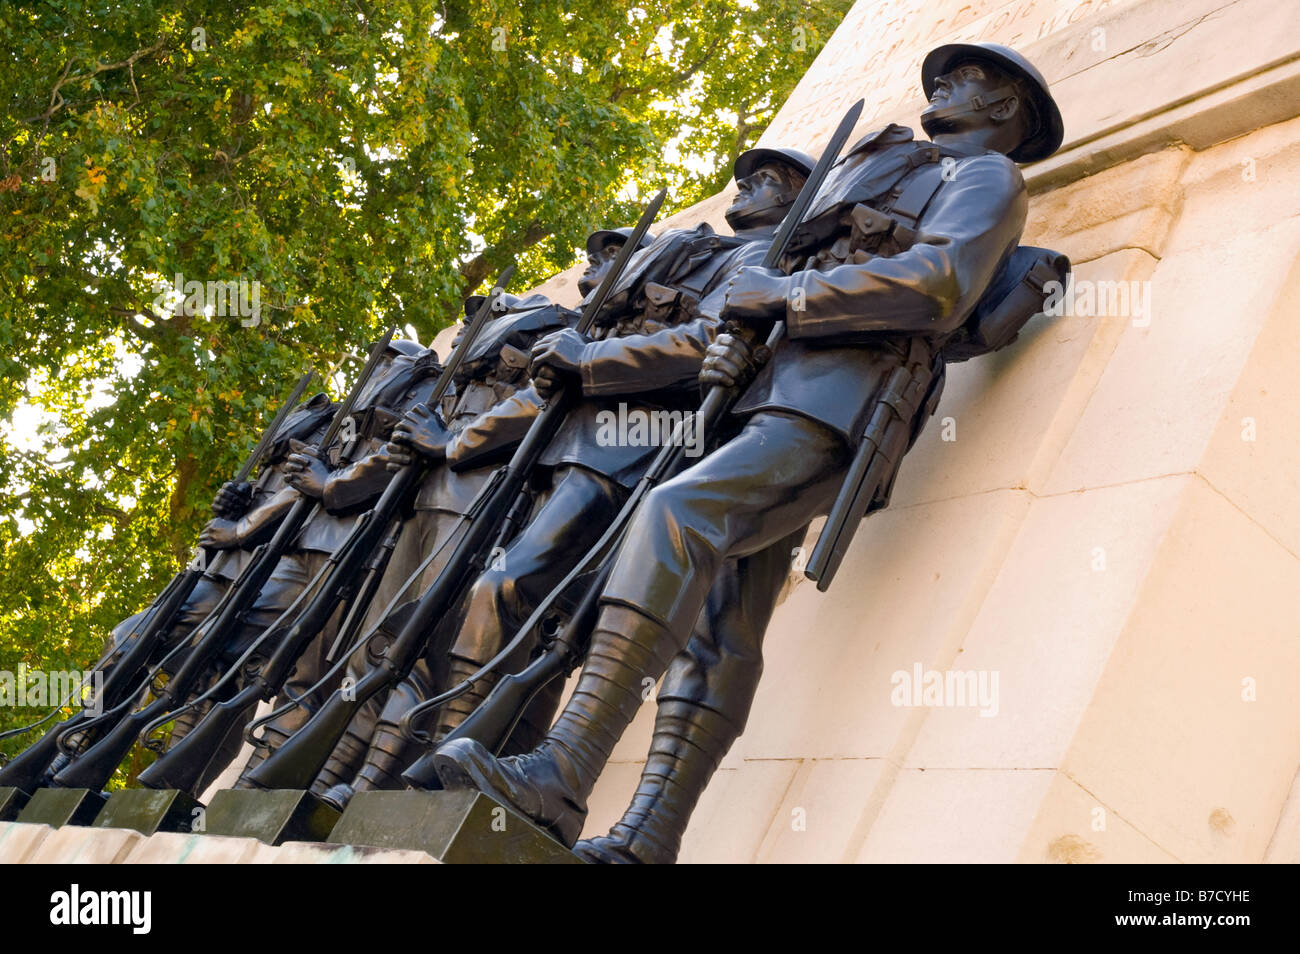 World War 2 rememberance memorial, St James Park, London Stock Photo